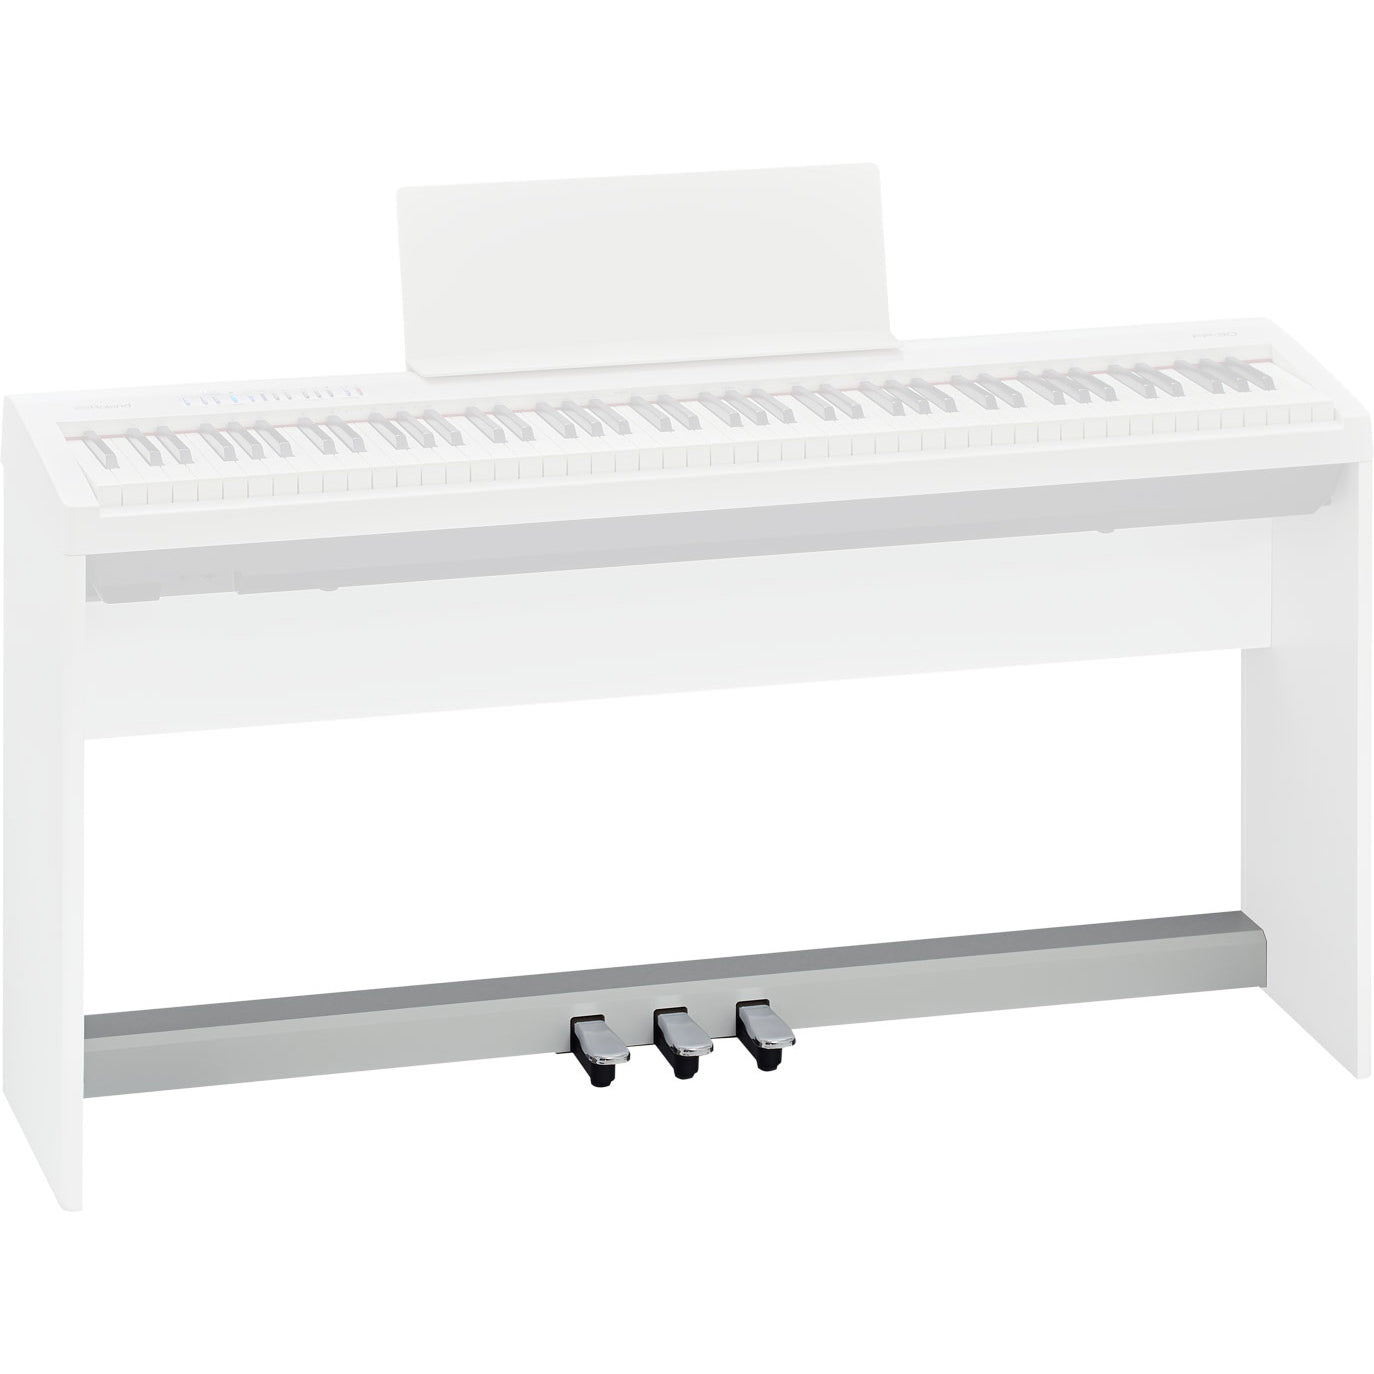 Roland KPD-70-WH Piano Pedal Unit White